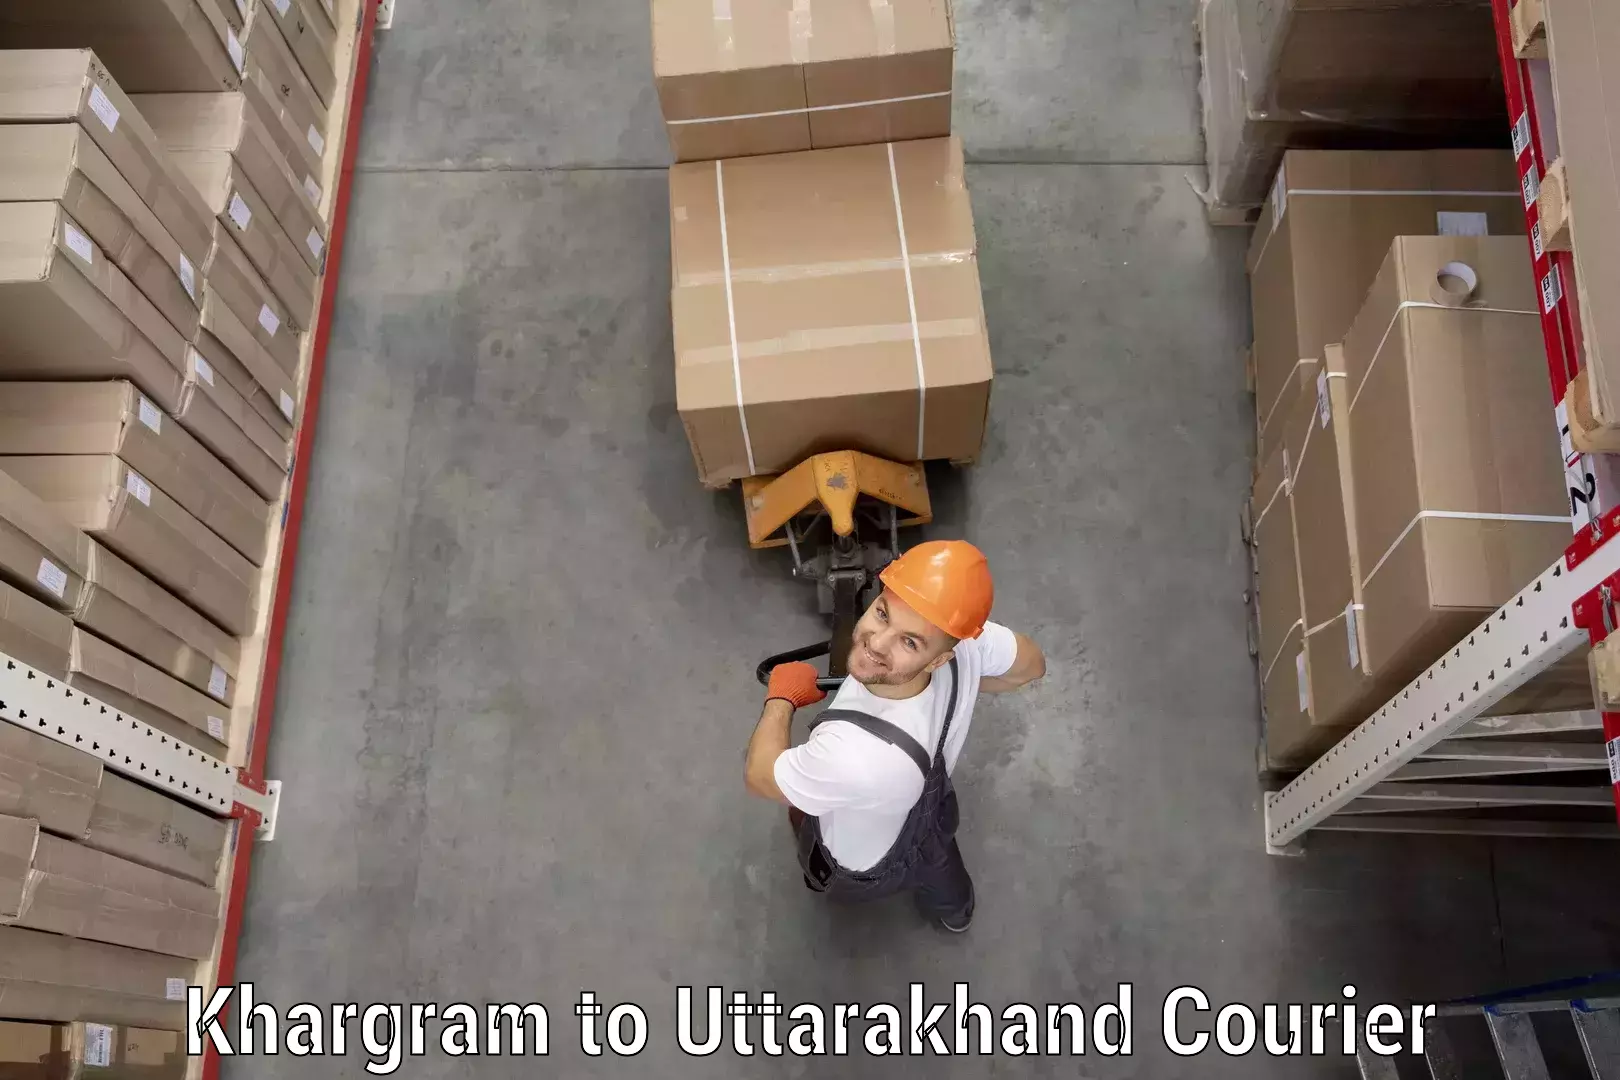 Nationwide delivery network Khargram to Dehradun